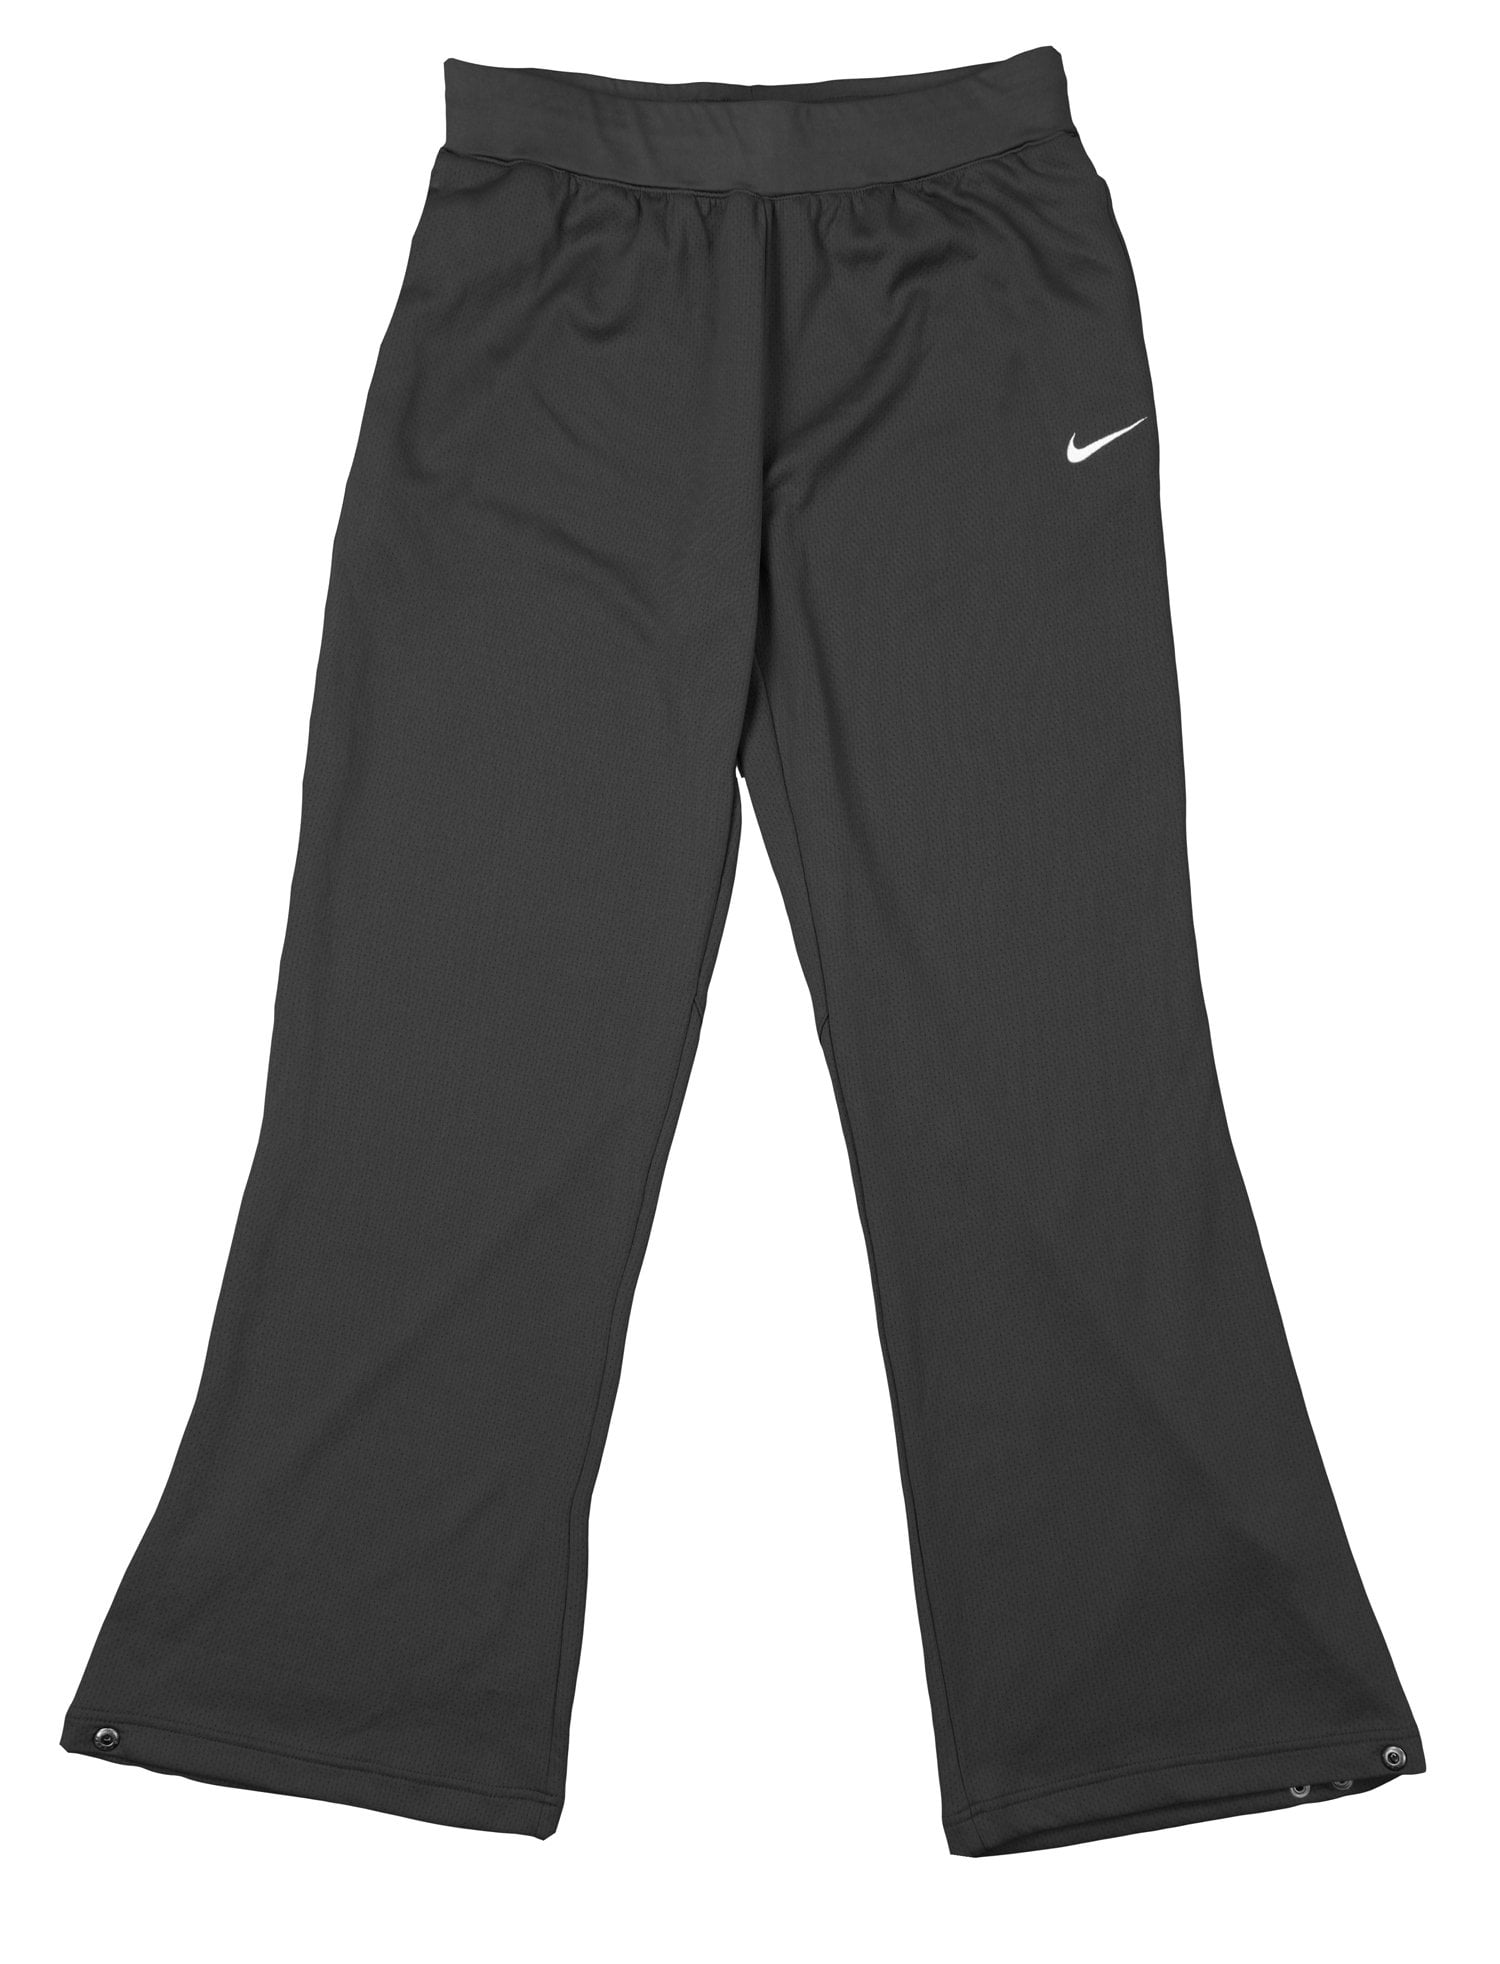 Nike Women's Road Trip Athletic Pants - Many Colors - Walmart.com